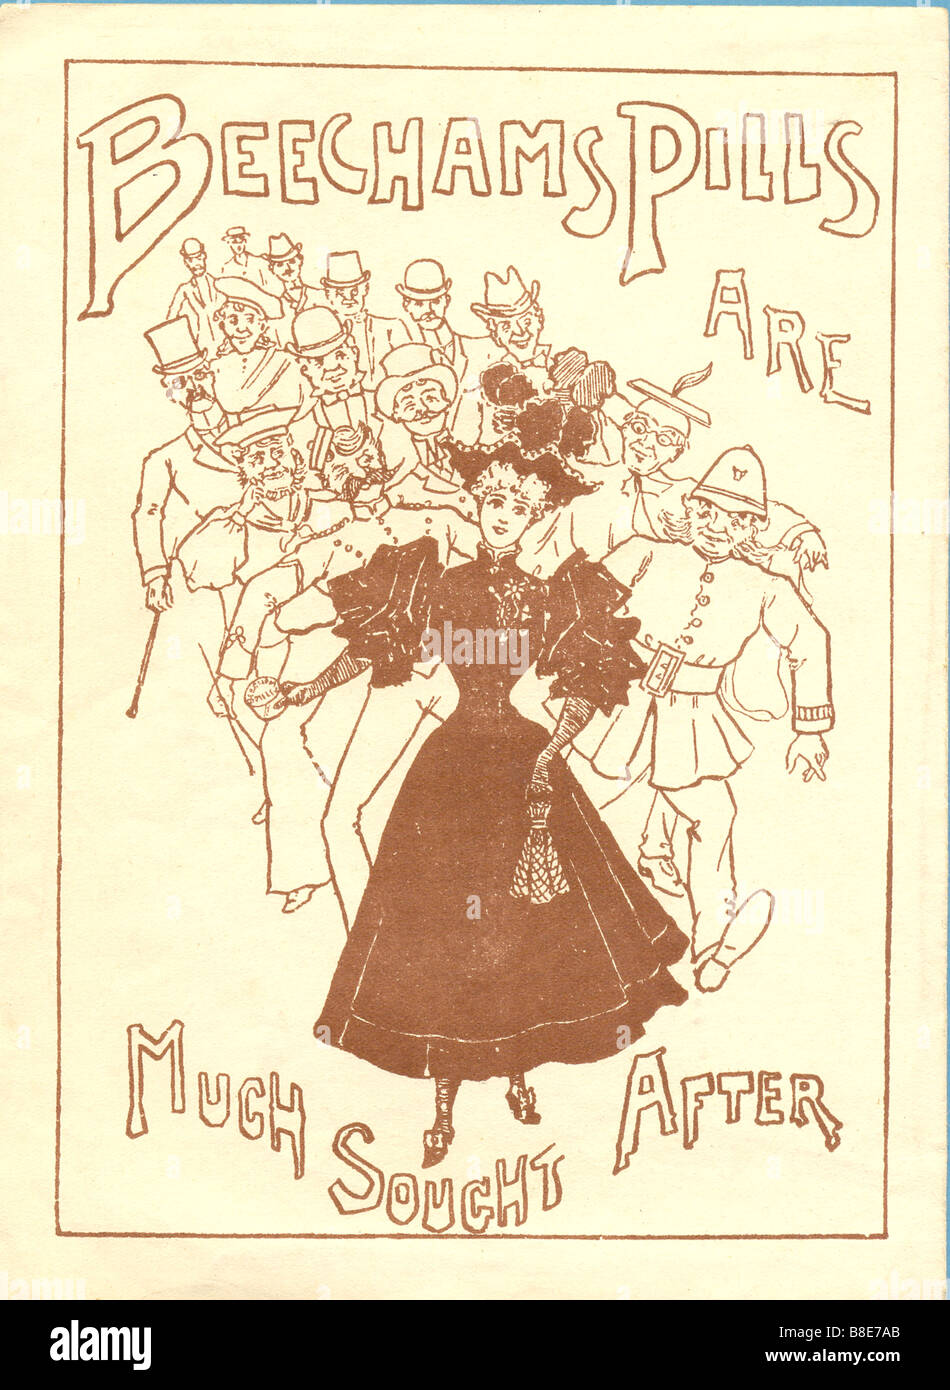 Verso of Alamy ref:  B8E7CT sheet music produced as advertisement for Beechams Pills circa 1895 Stock Photo